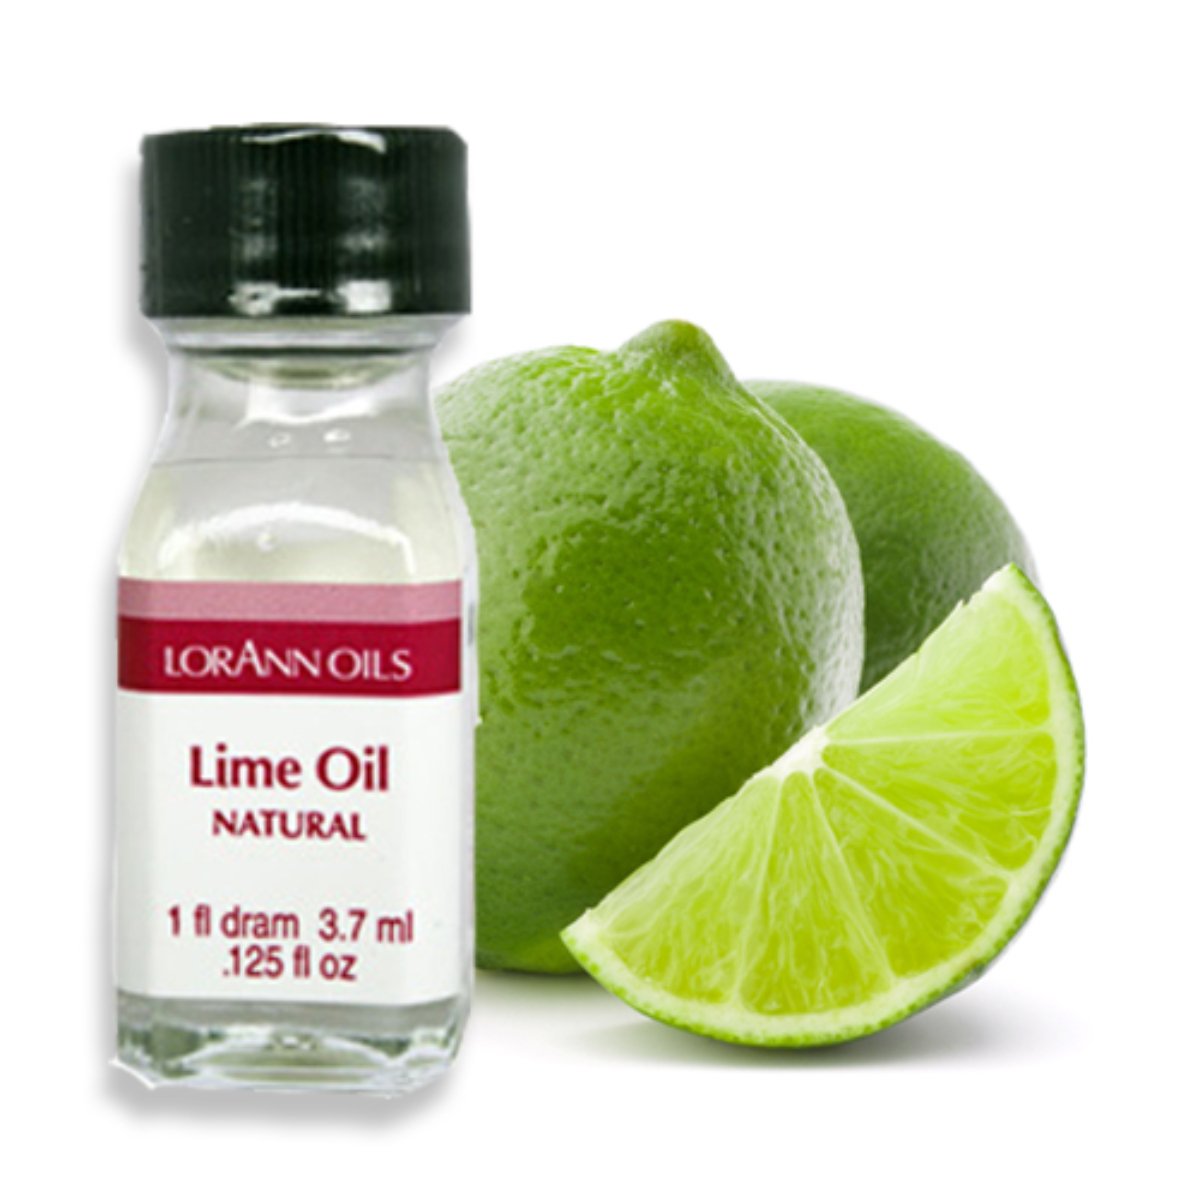 Lime Oil, Natural Flavor 1 Dram - Bake Supply Plus